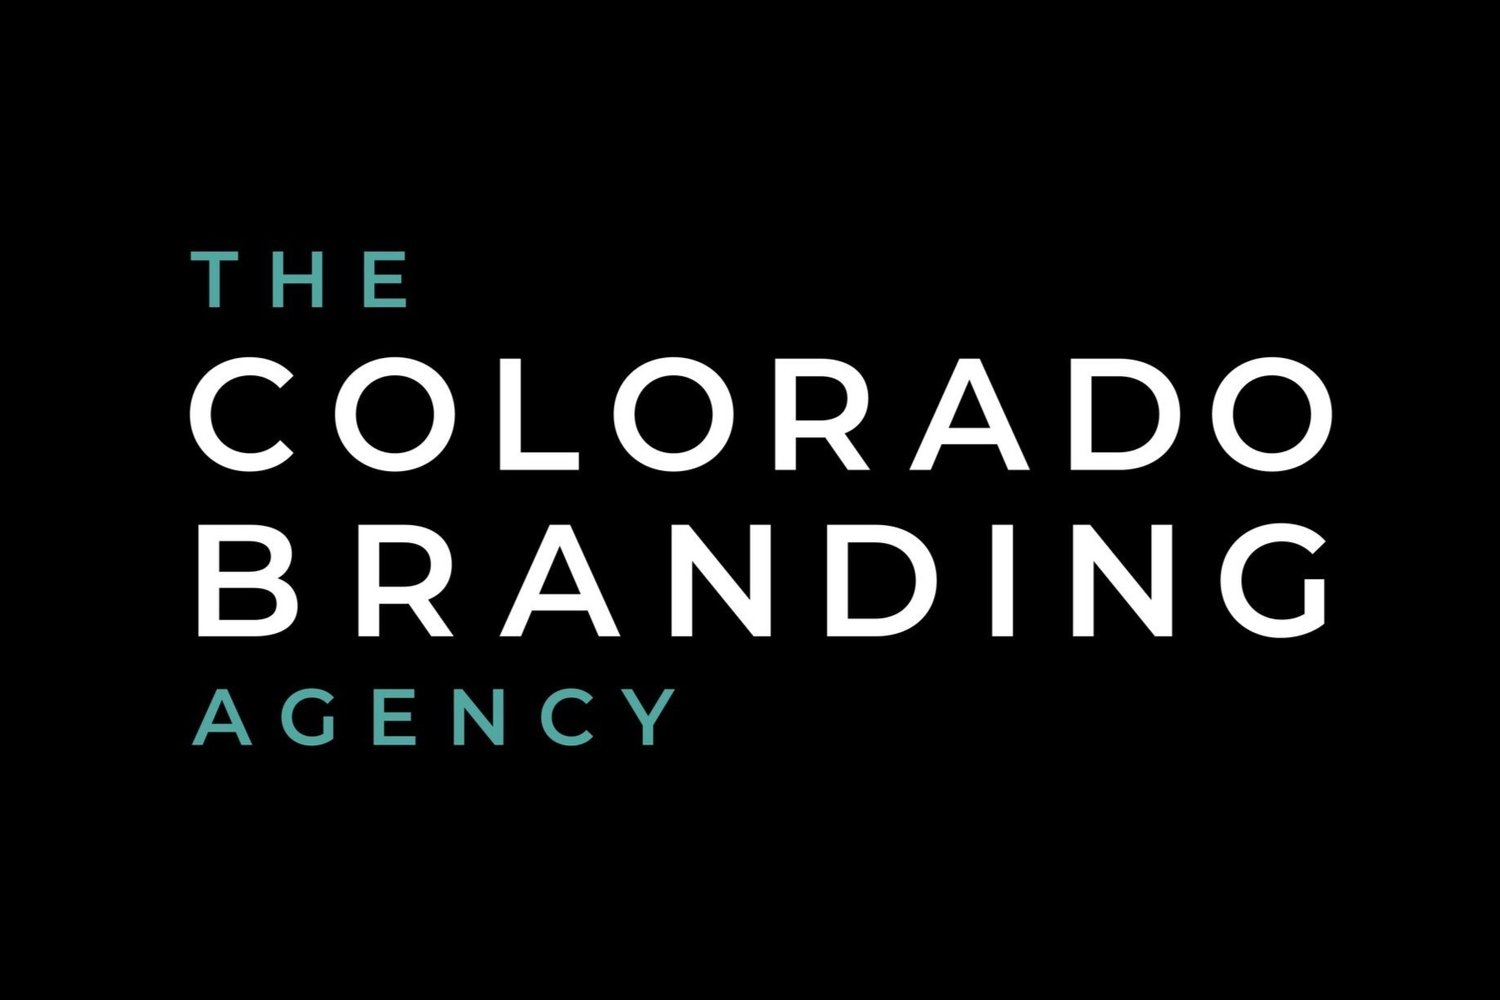 The Colorado Branding Agency